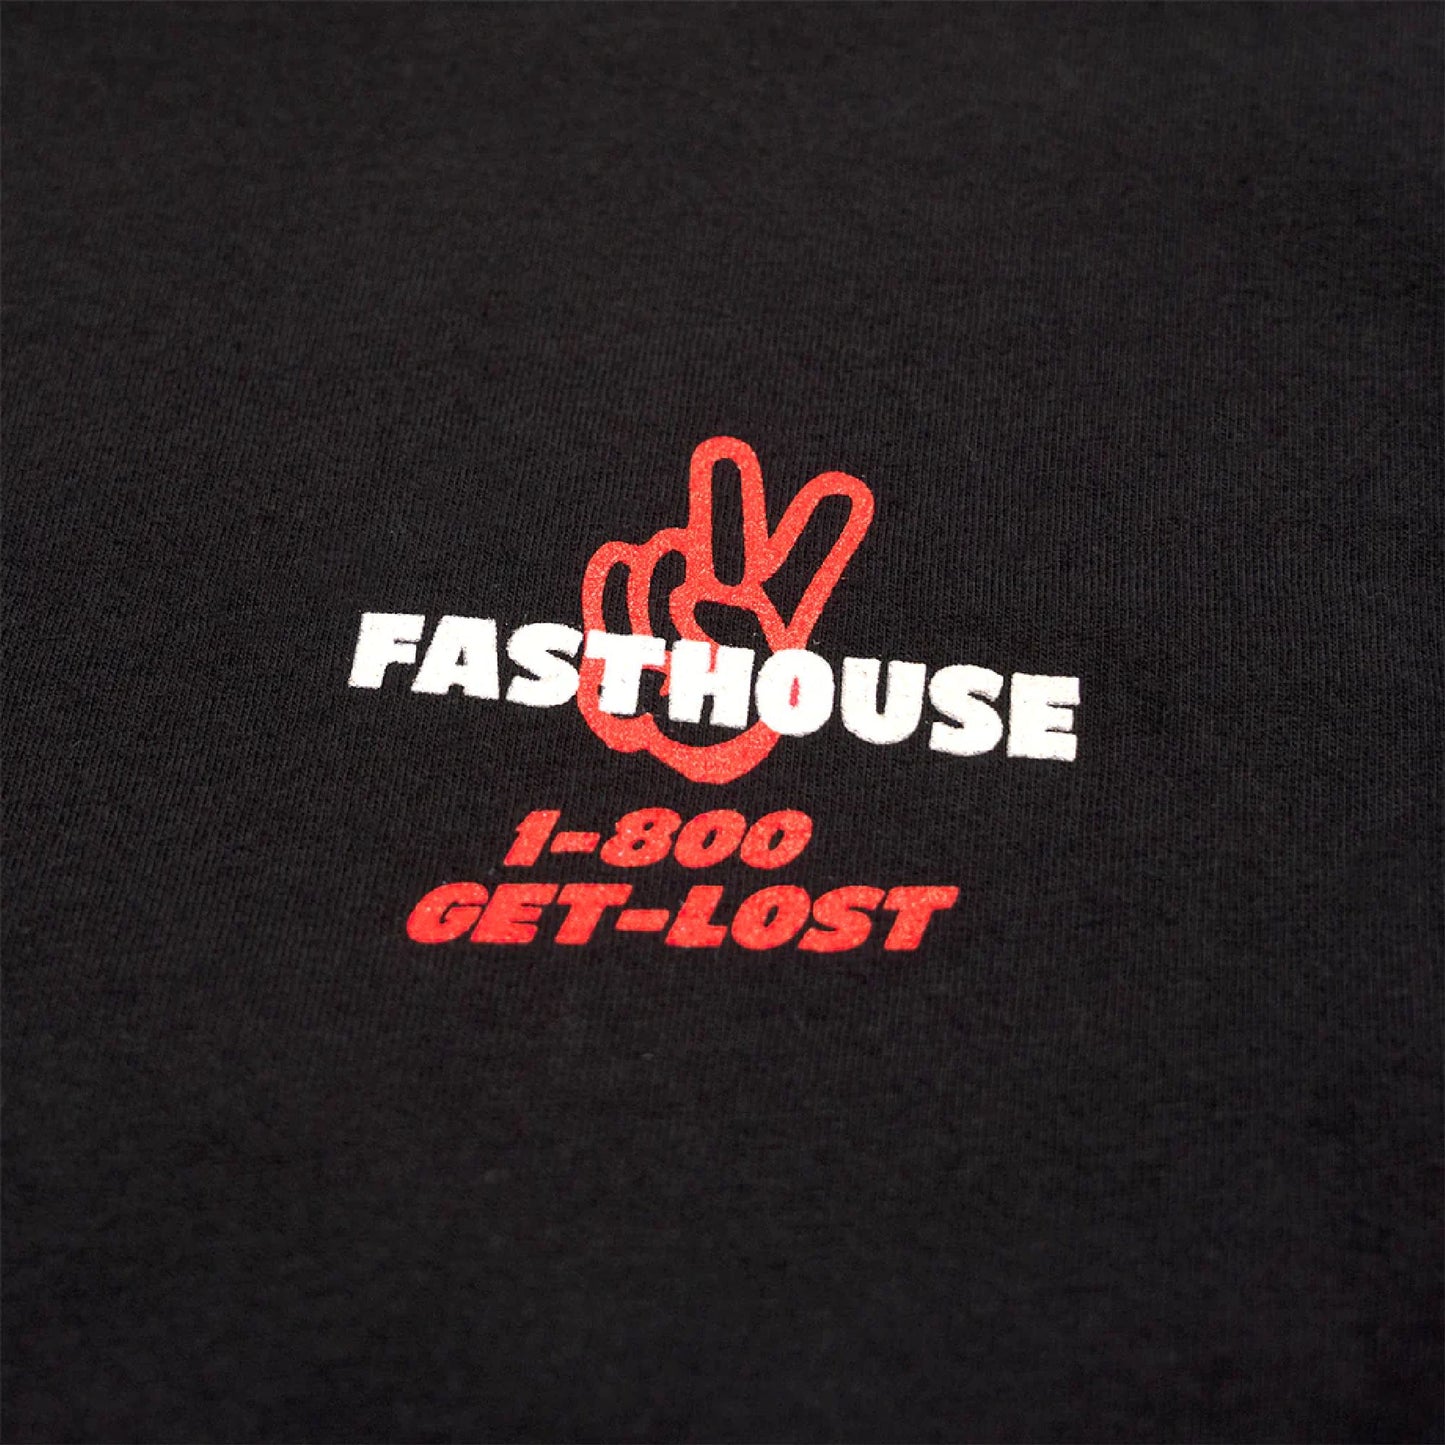 Fasthouse Youth Coast 2 Coast SS Tee Black SS Shirts